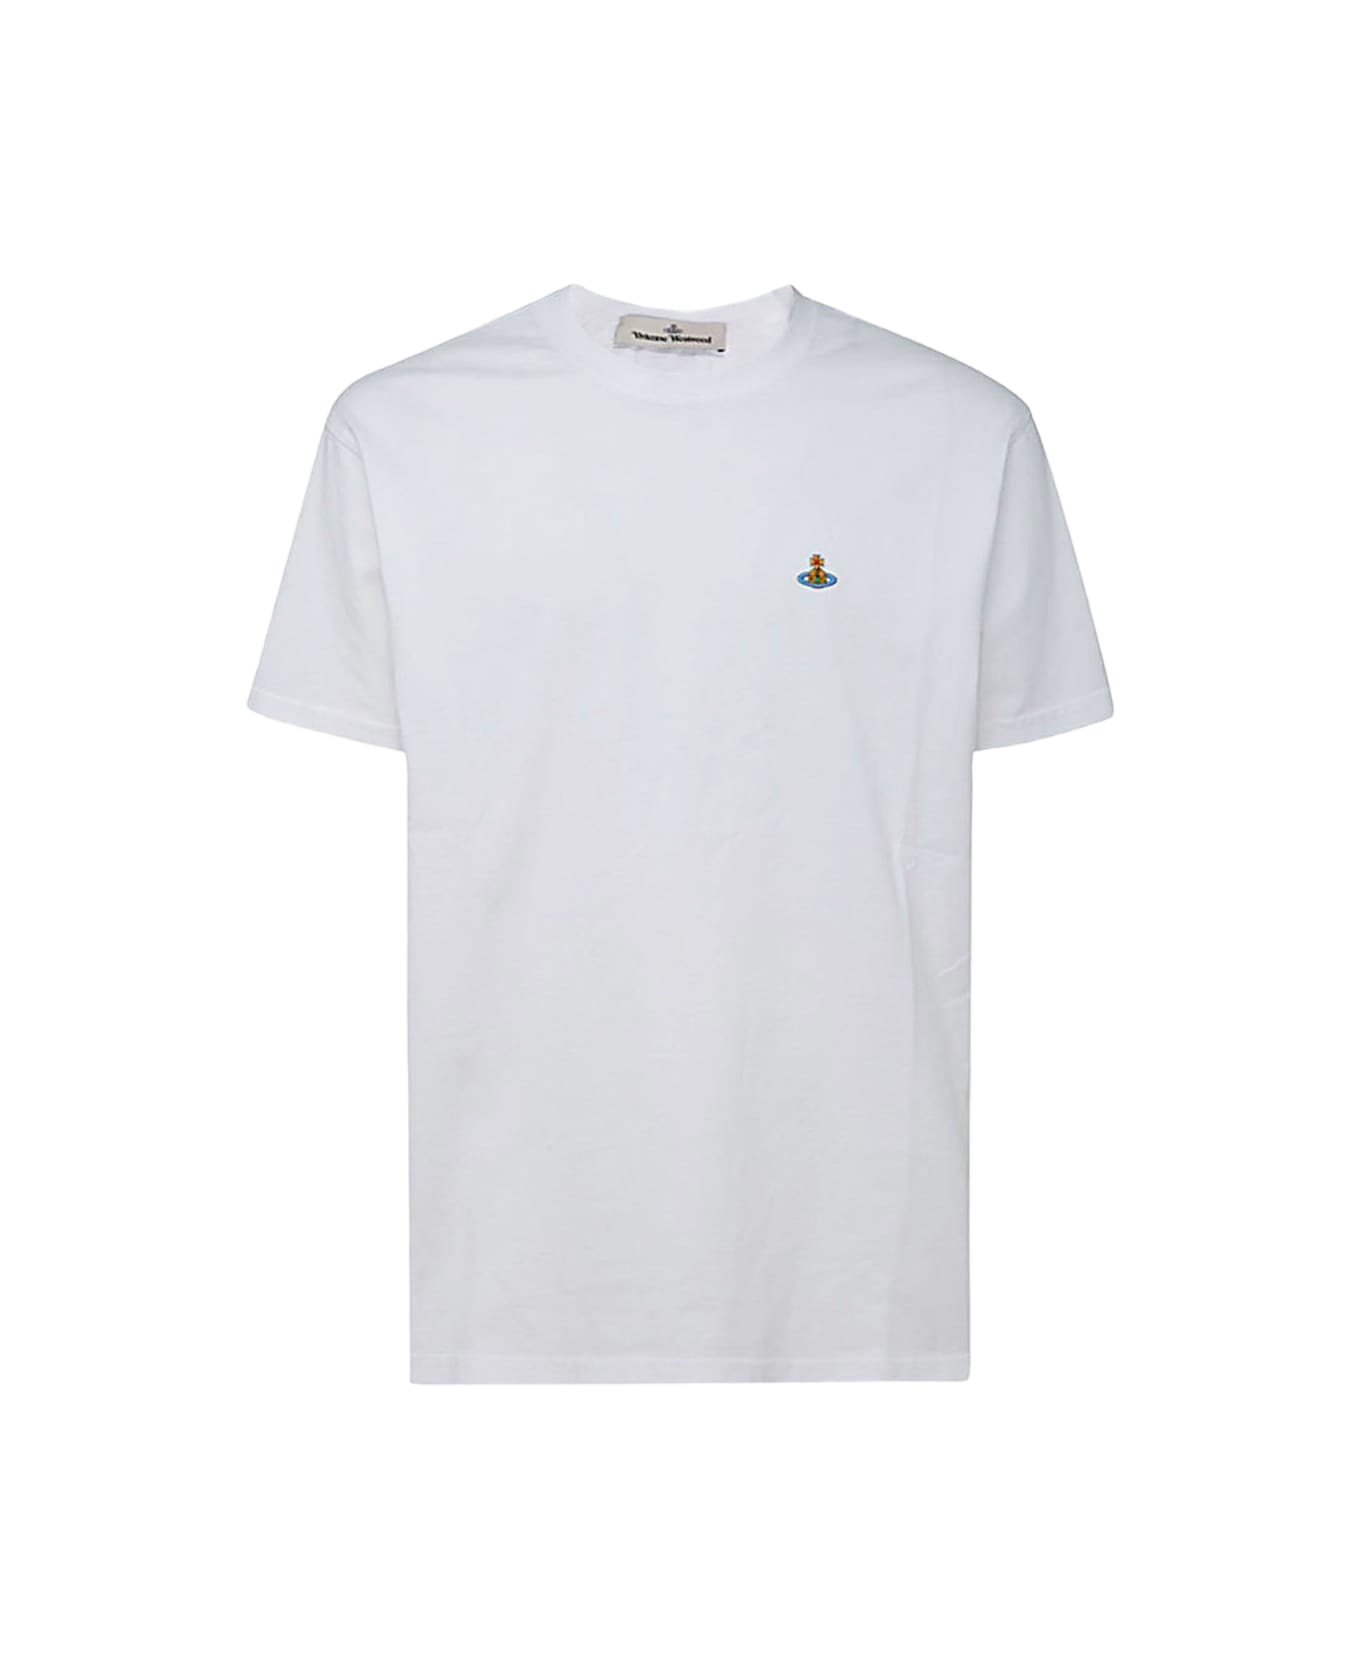 Vivienne Westwood White Cotton T-shirt - White